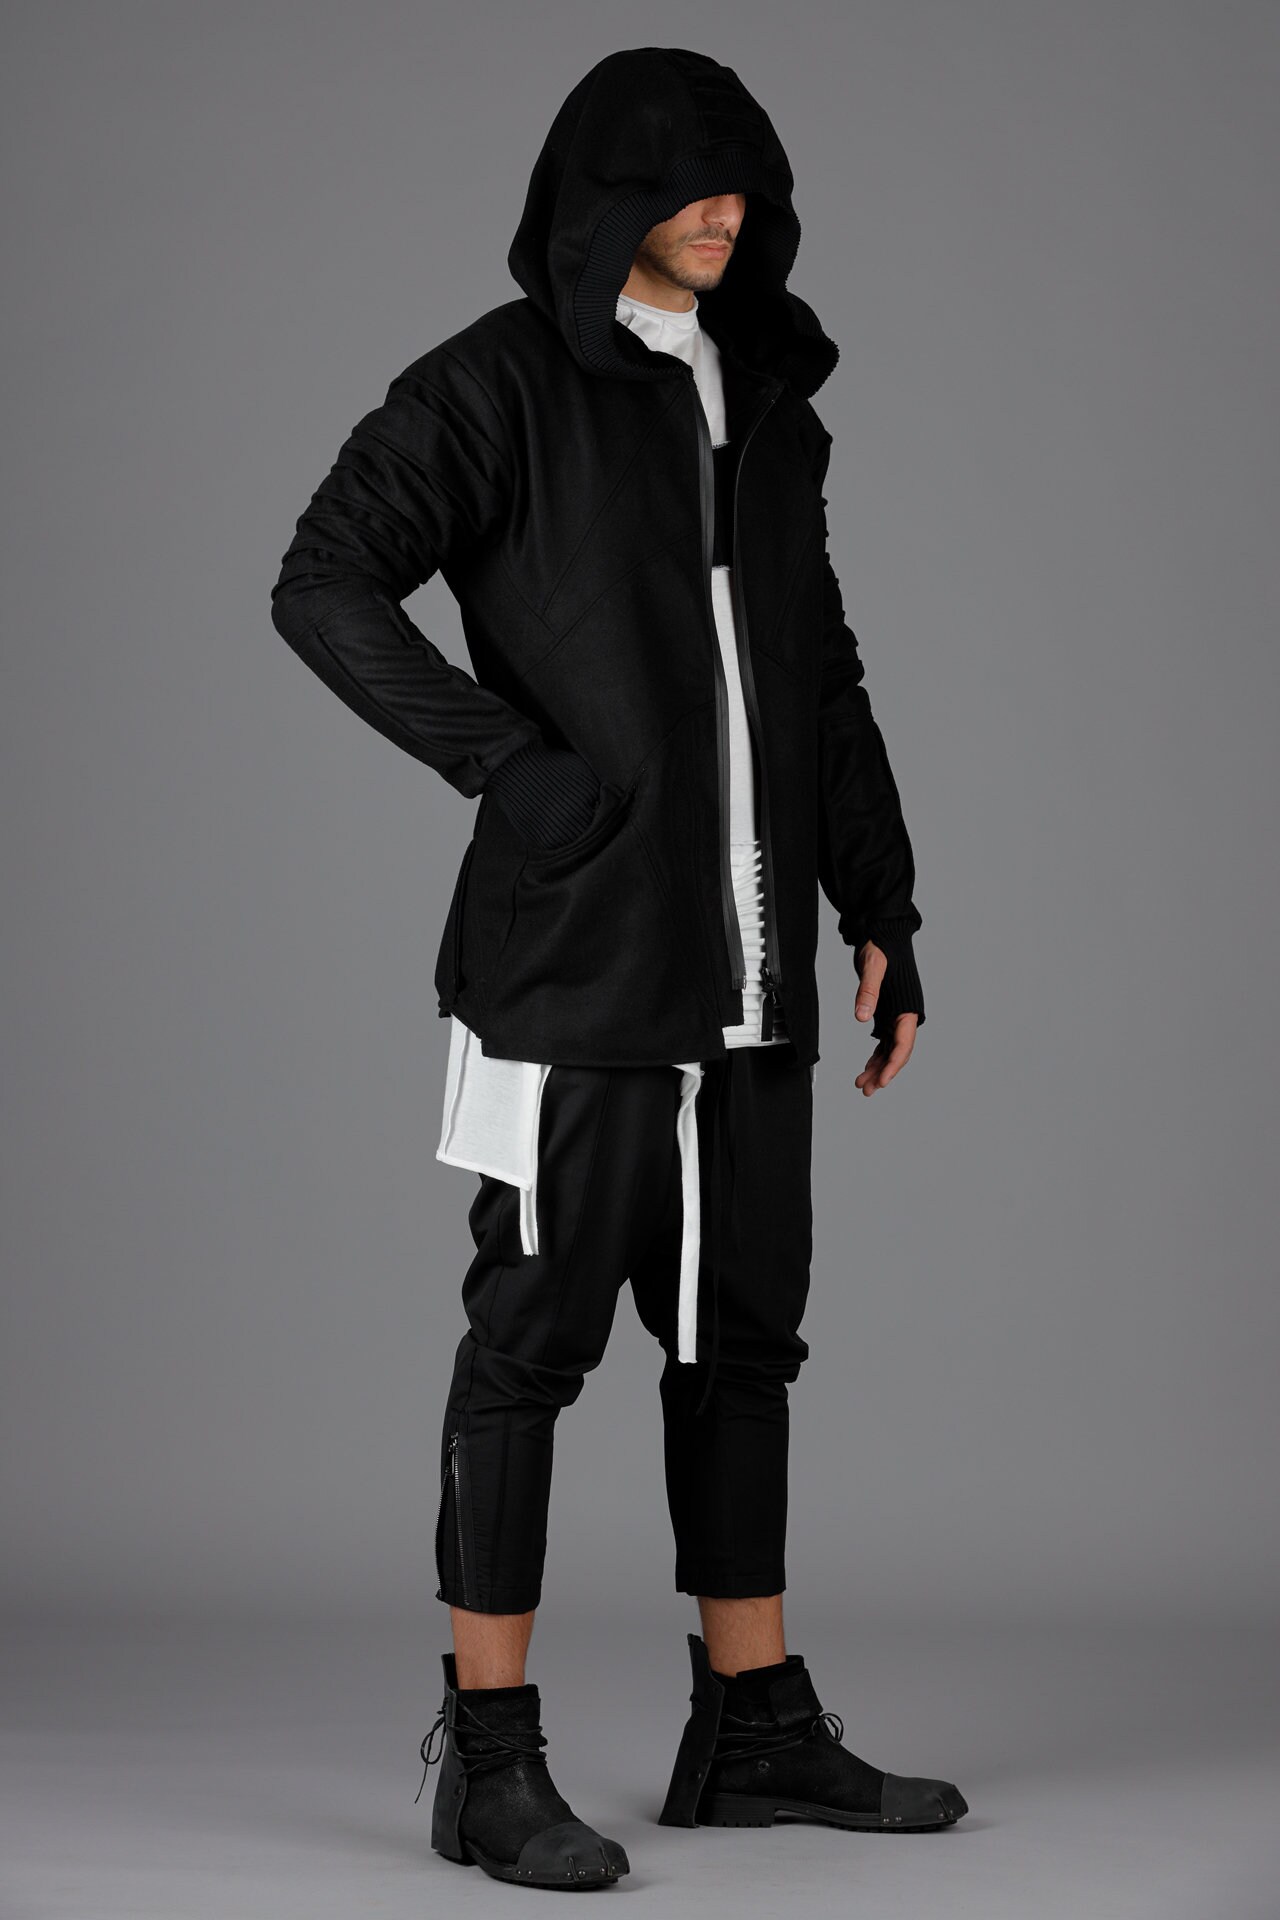 Designer Short Coat Hooded Men's Coat Black Jacket - Etsy